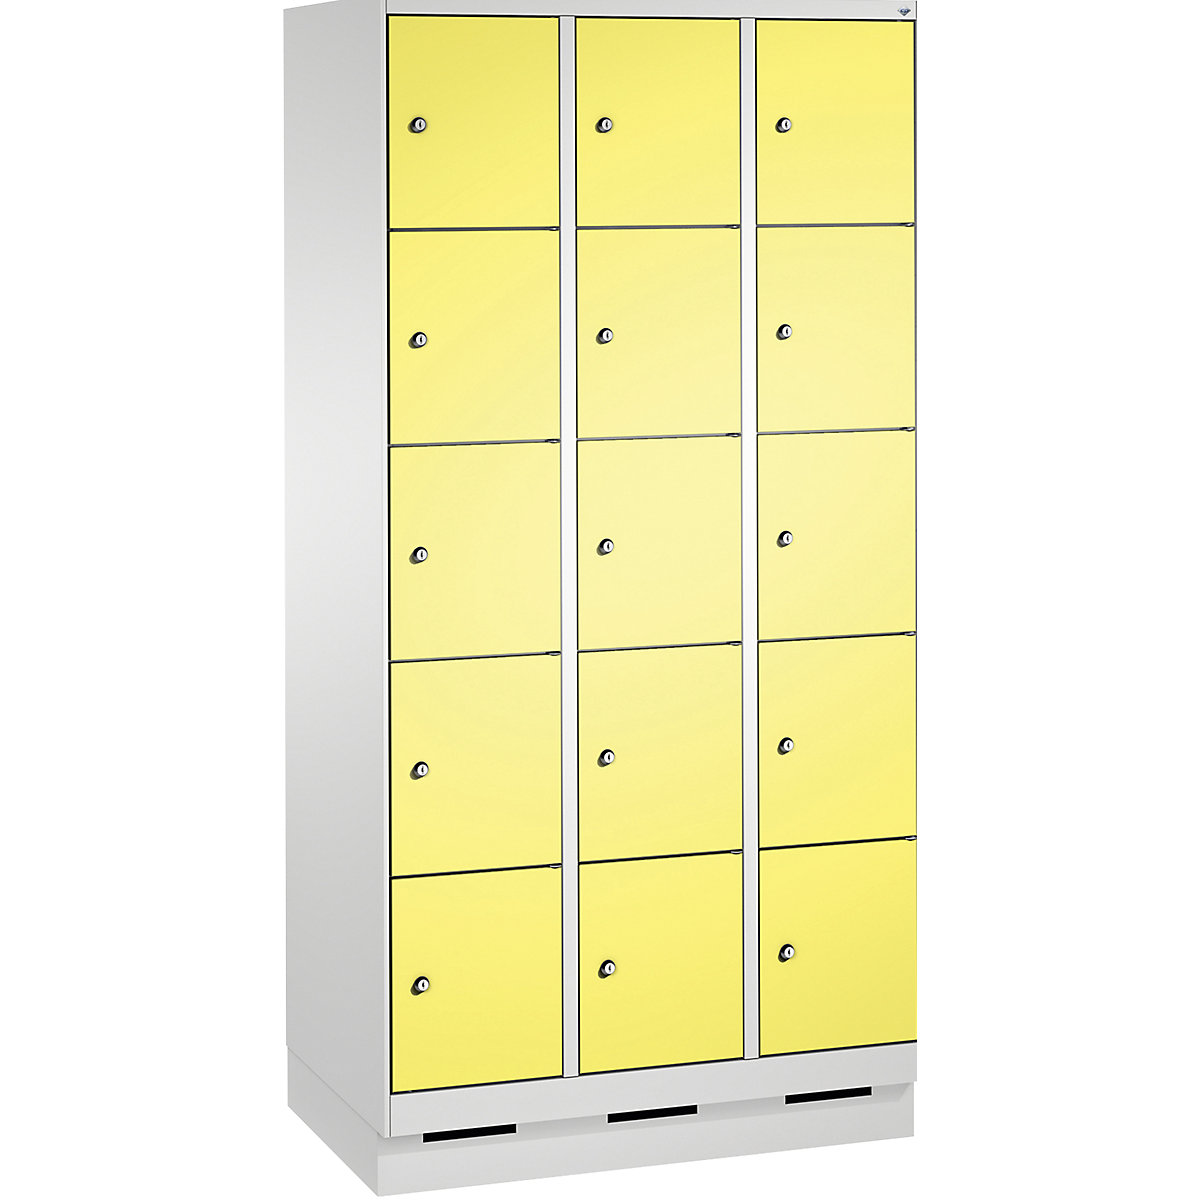 EVOLO locker unit, with plinth – C+P, 3 compartments, 5 shelf compartments each, compartment width 300 mm, light grey / sulphur yellow